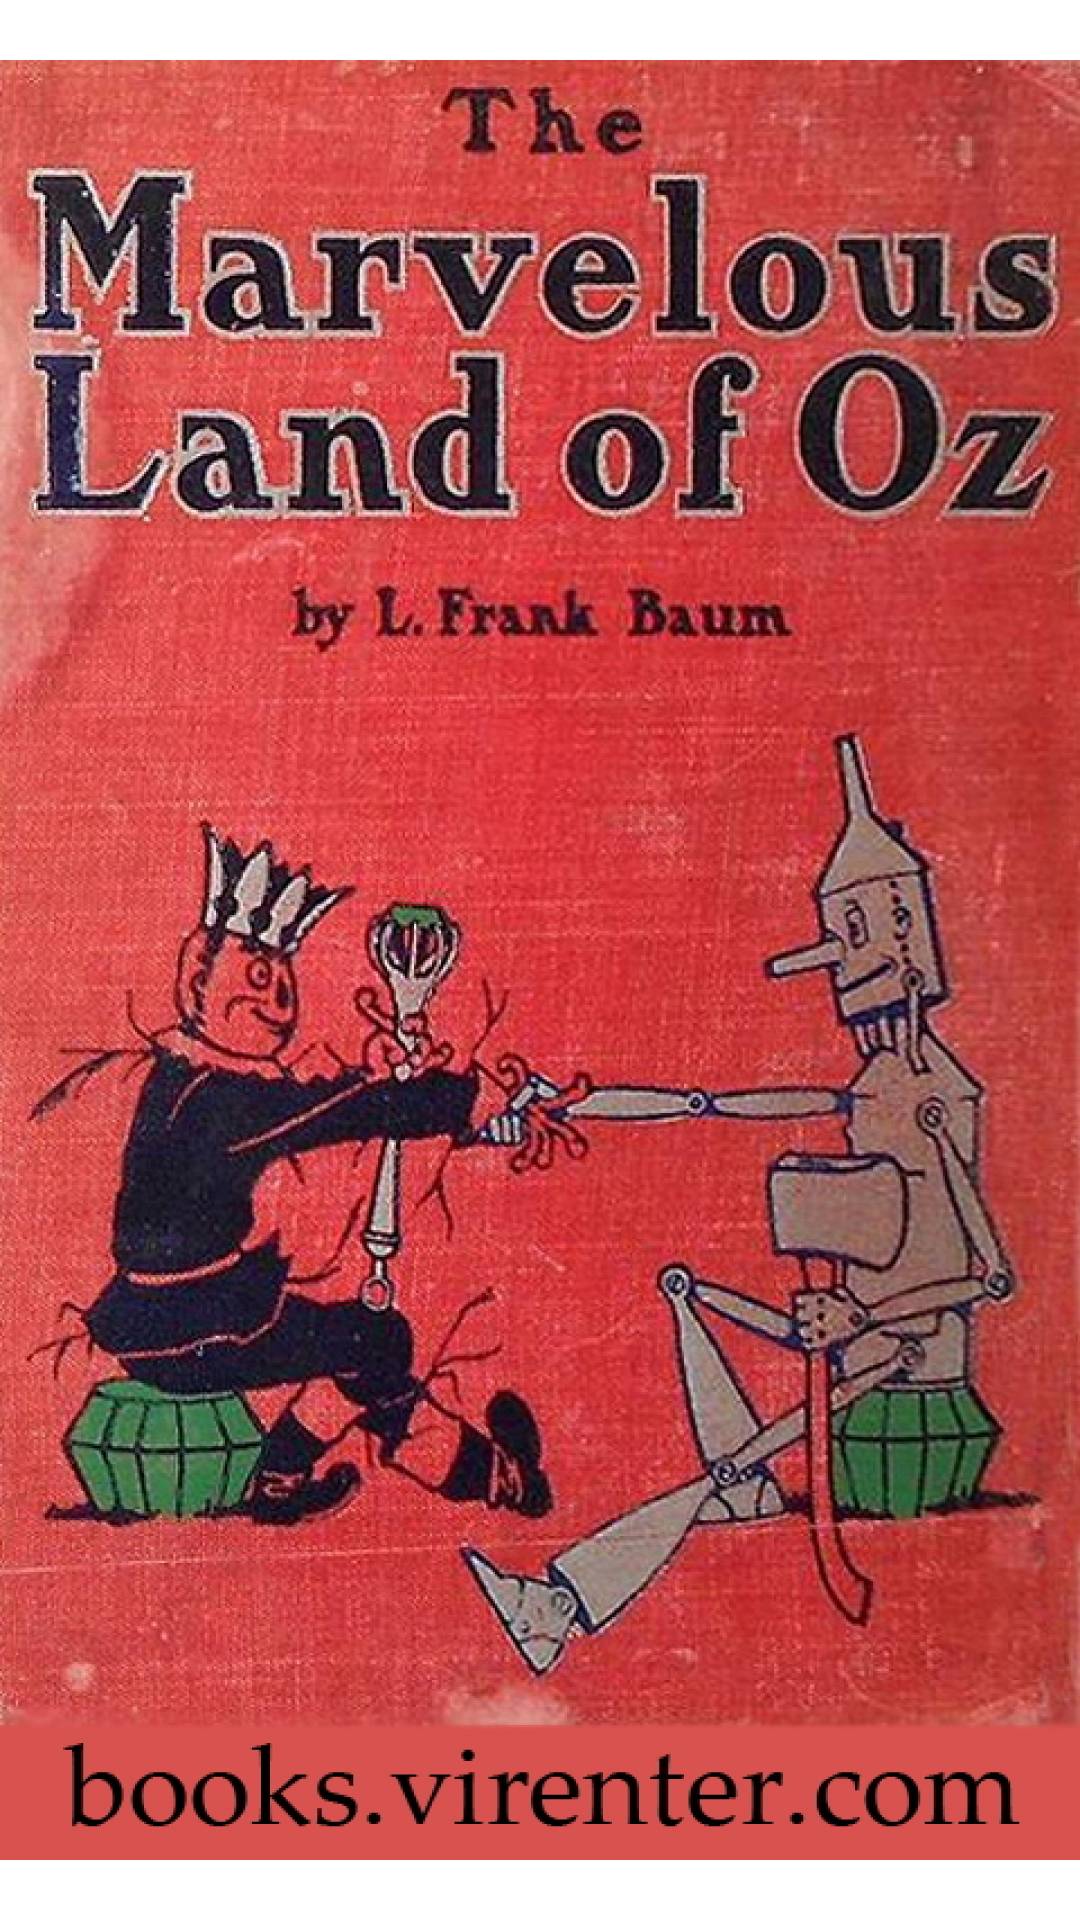 L.Frank Baum - The Marvelous Land of Oz